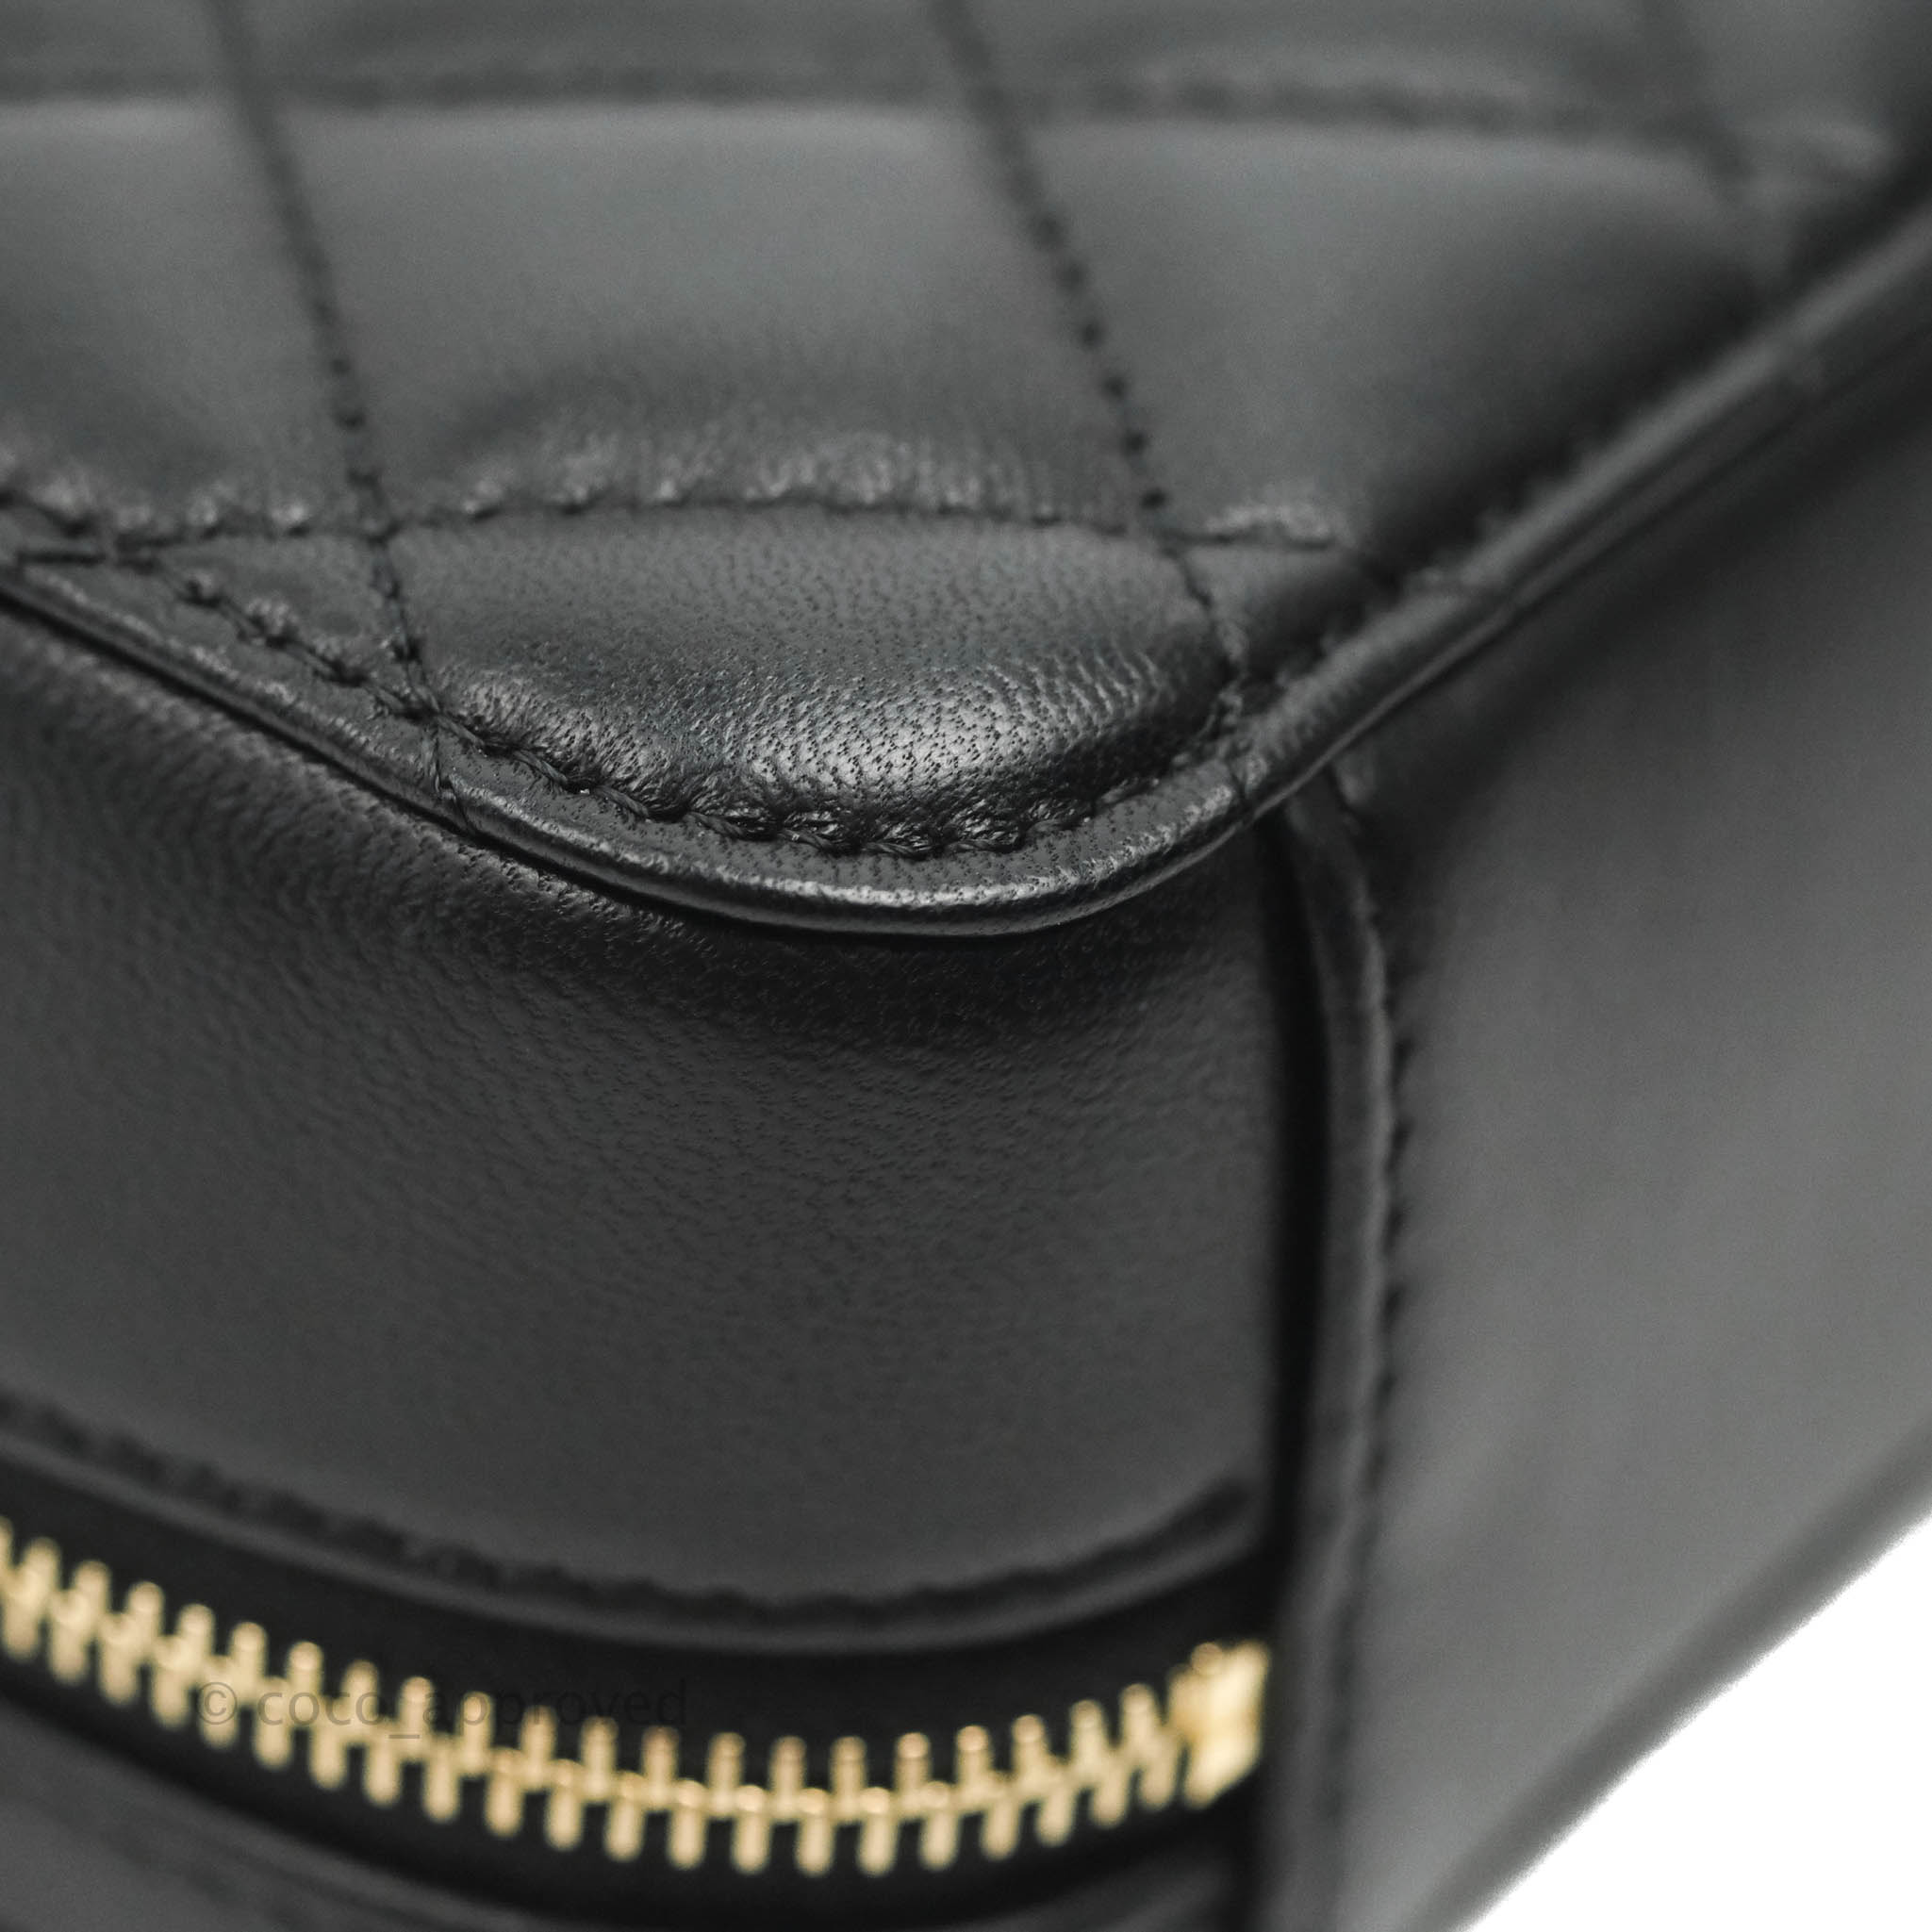 New in Box Authentic CHANEL Pearl Crush Camera Bag Handbag